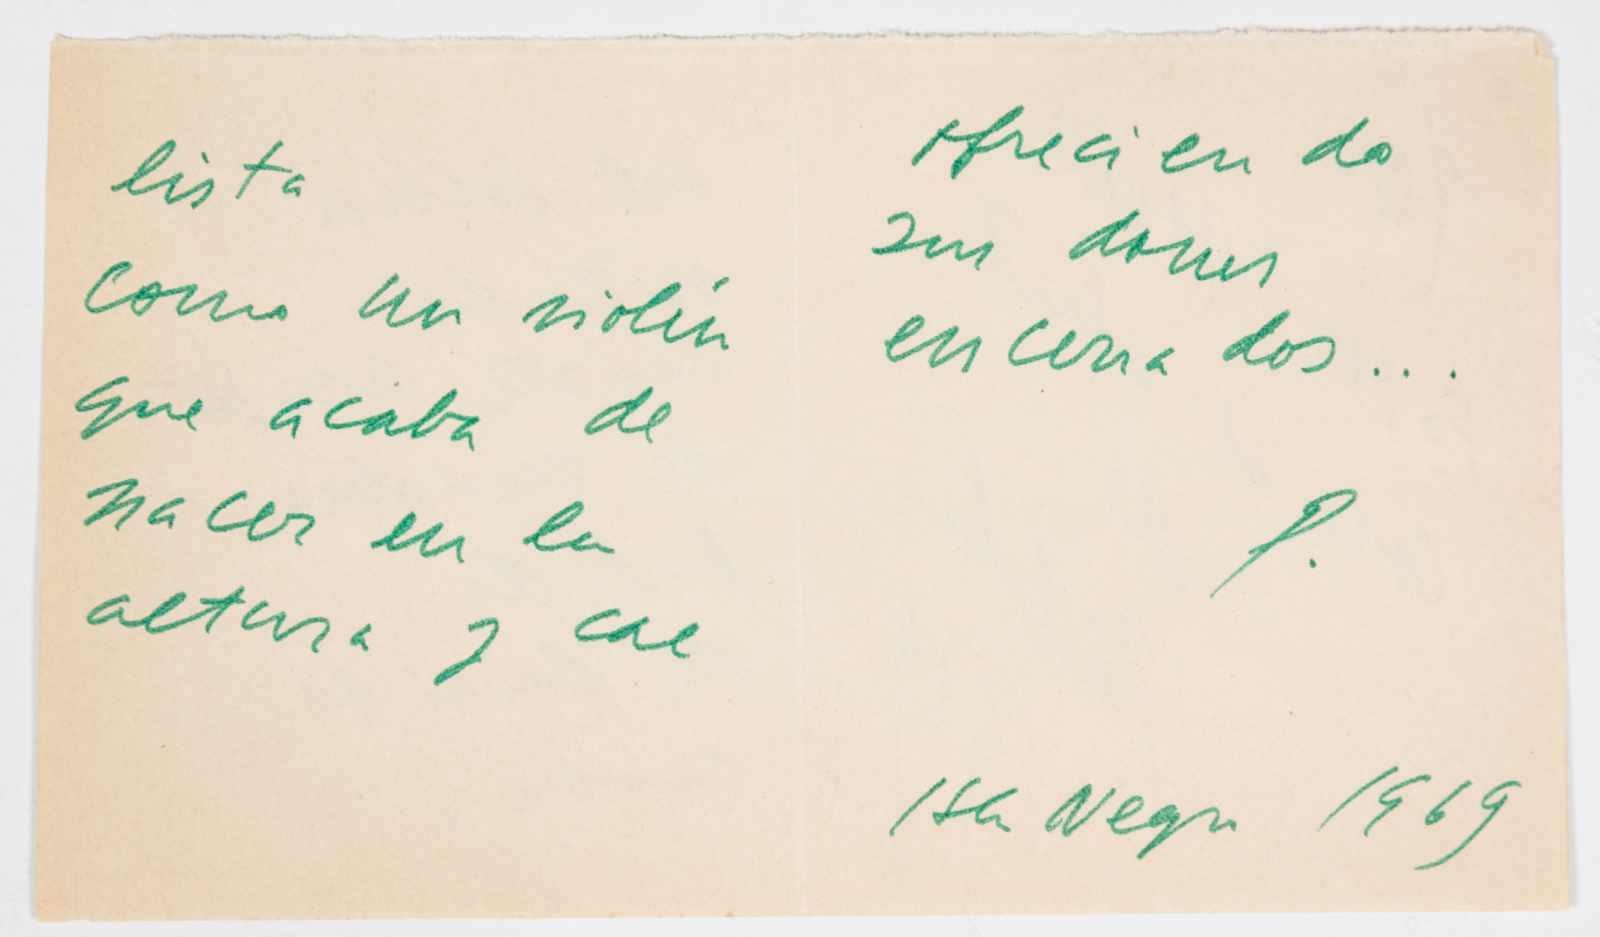 Poem for Ester Matte. Poem handwritten in green ink by Pablo Neruda addressed to Ester Matte. On a - Image 2 of 2